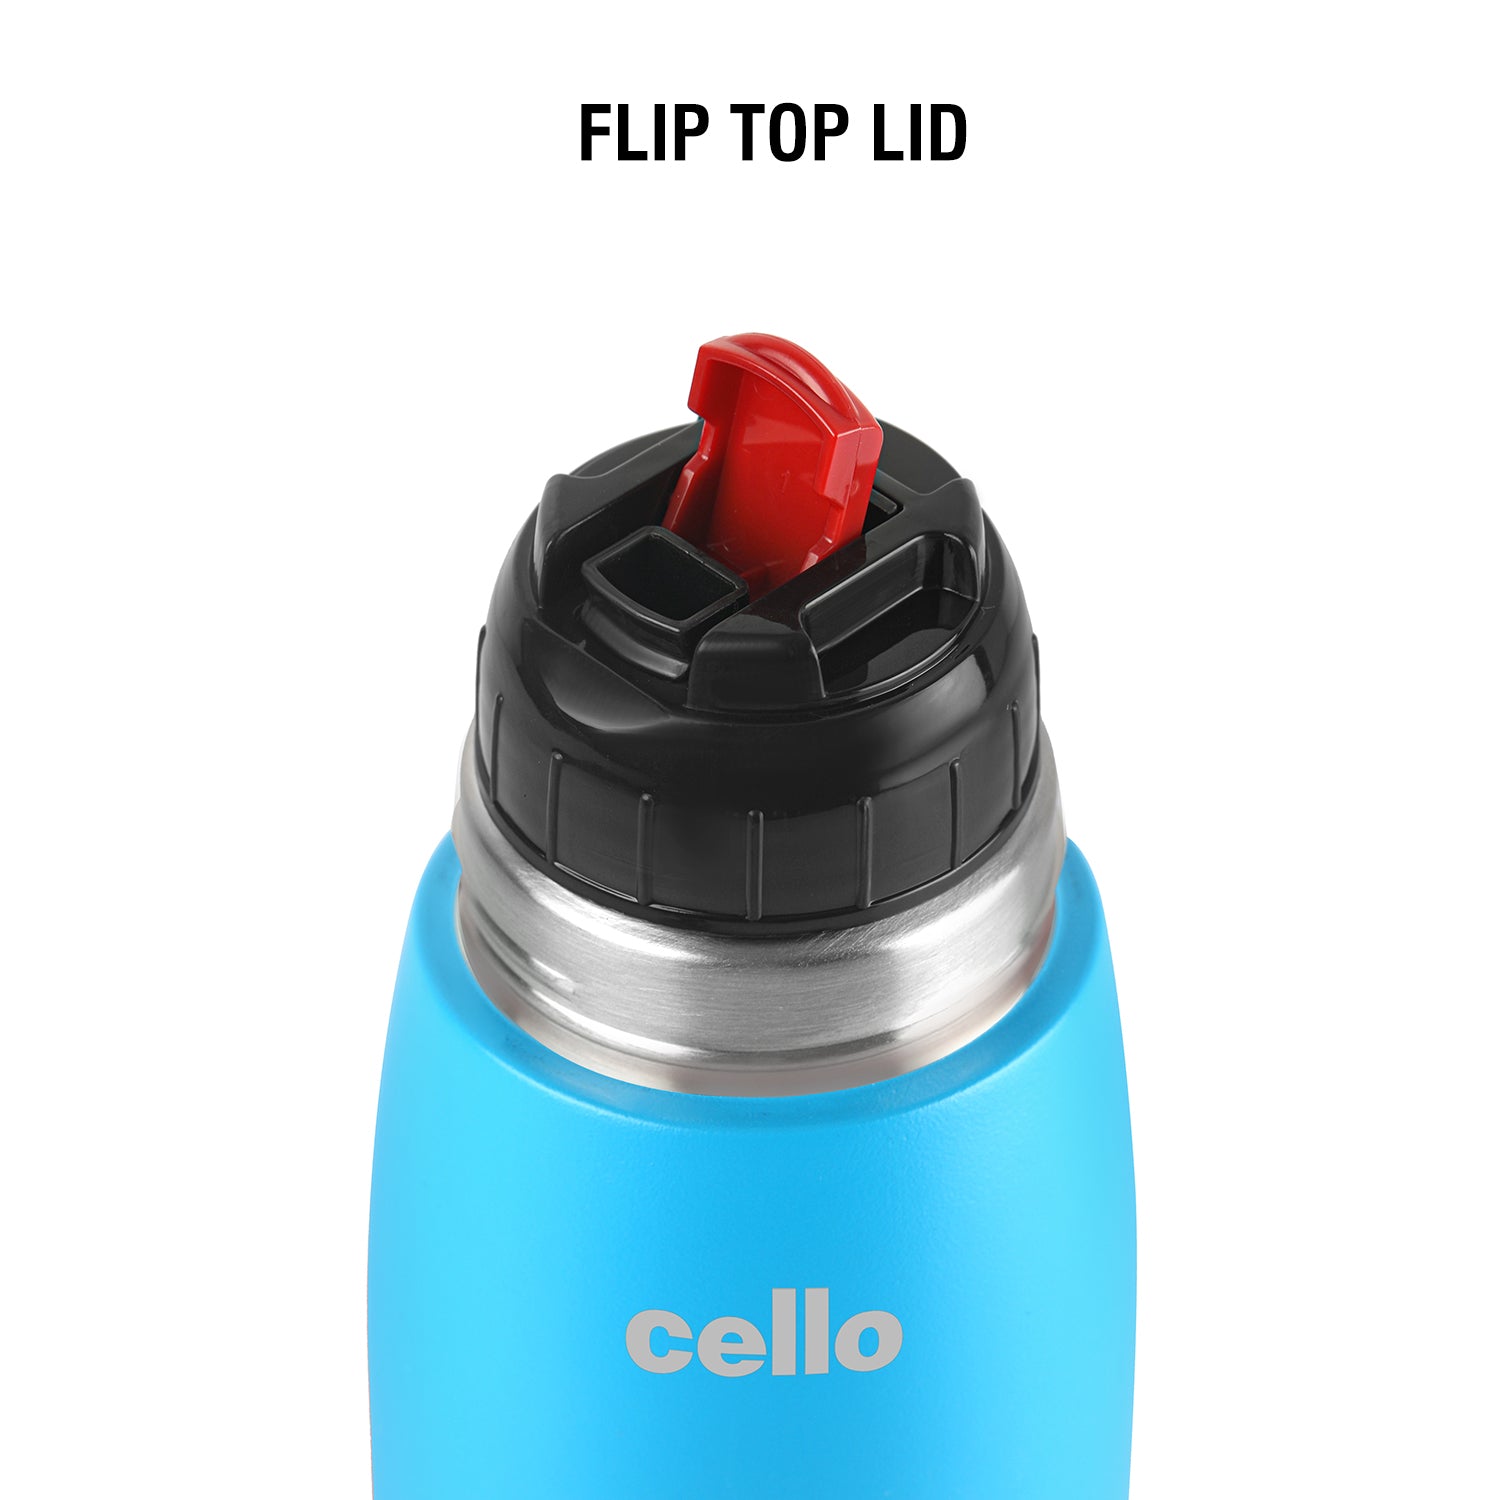 Duro Cup Style Flask, Vacusteel Water Bottle 750ml Blue / 750ml